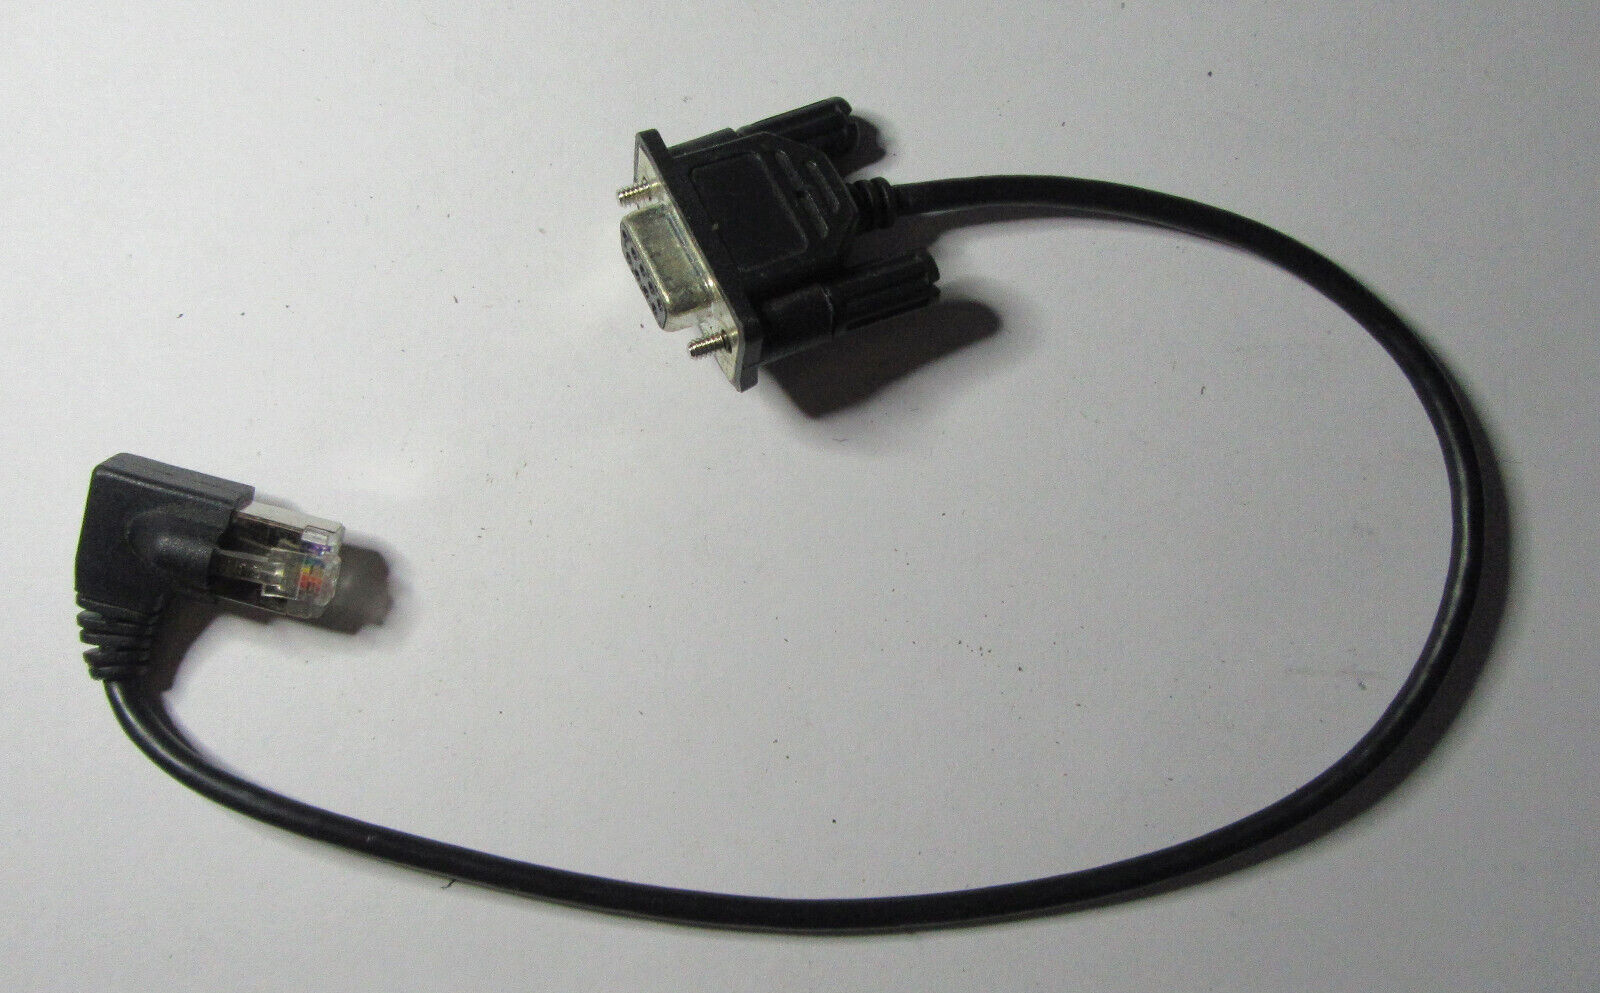 Genuine Vintage Rare Ricochet Data Cable for Ricochet Model 21062 Wireless Modem